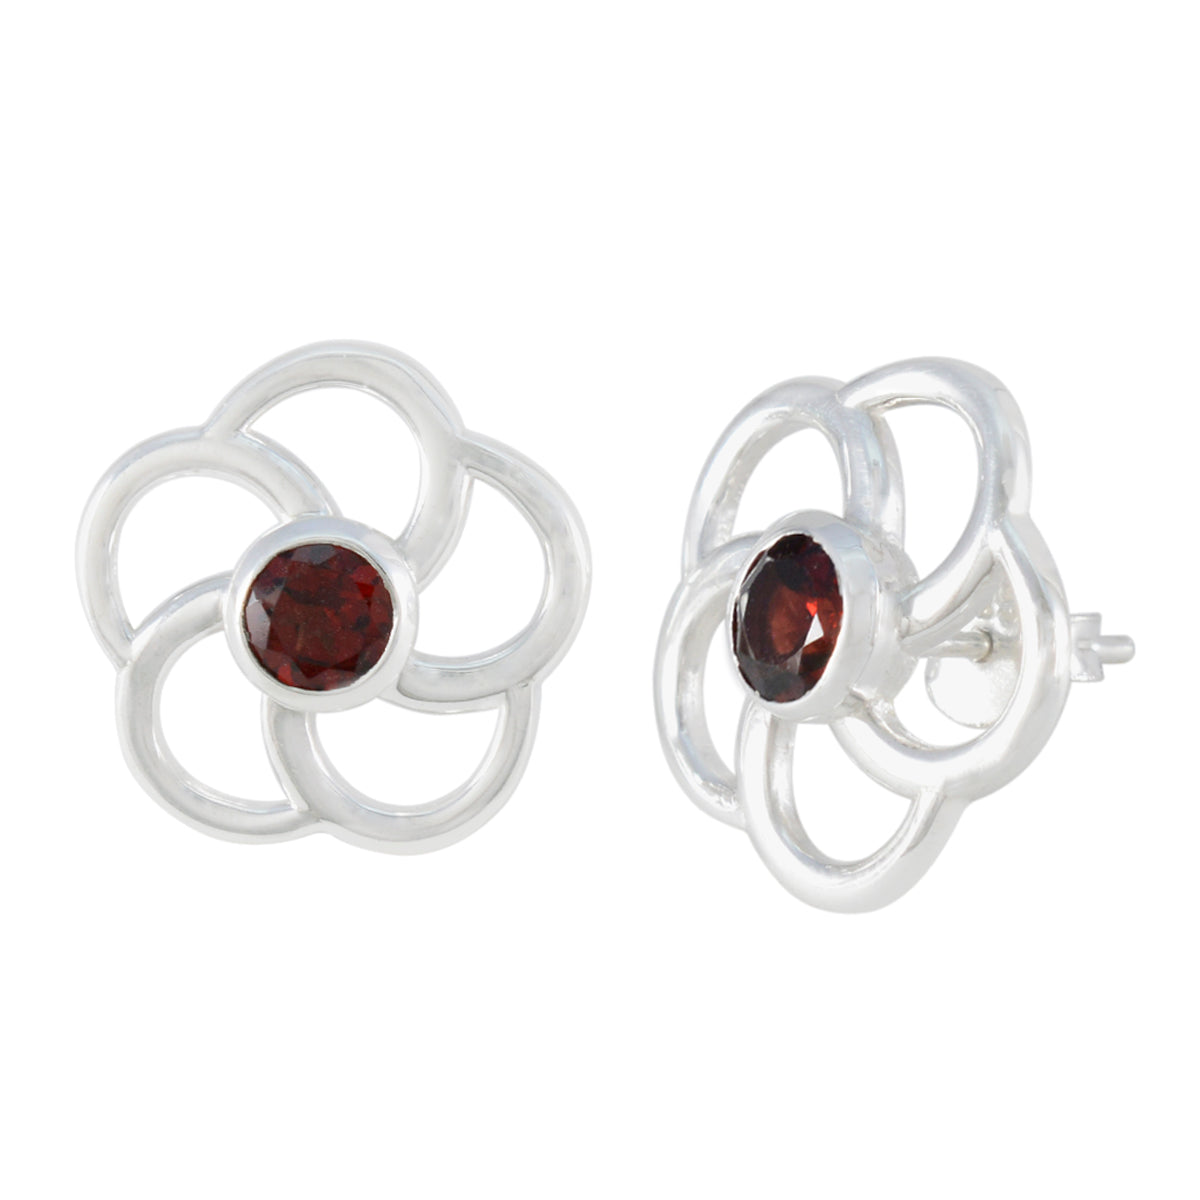 Riyo Easy On The Eye Sterling Silver Earring For Femme Garnet Earring Bezel Setting Red Earring Stud Earring